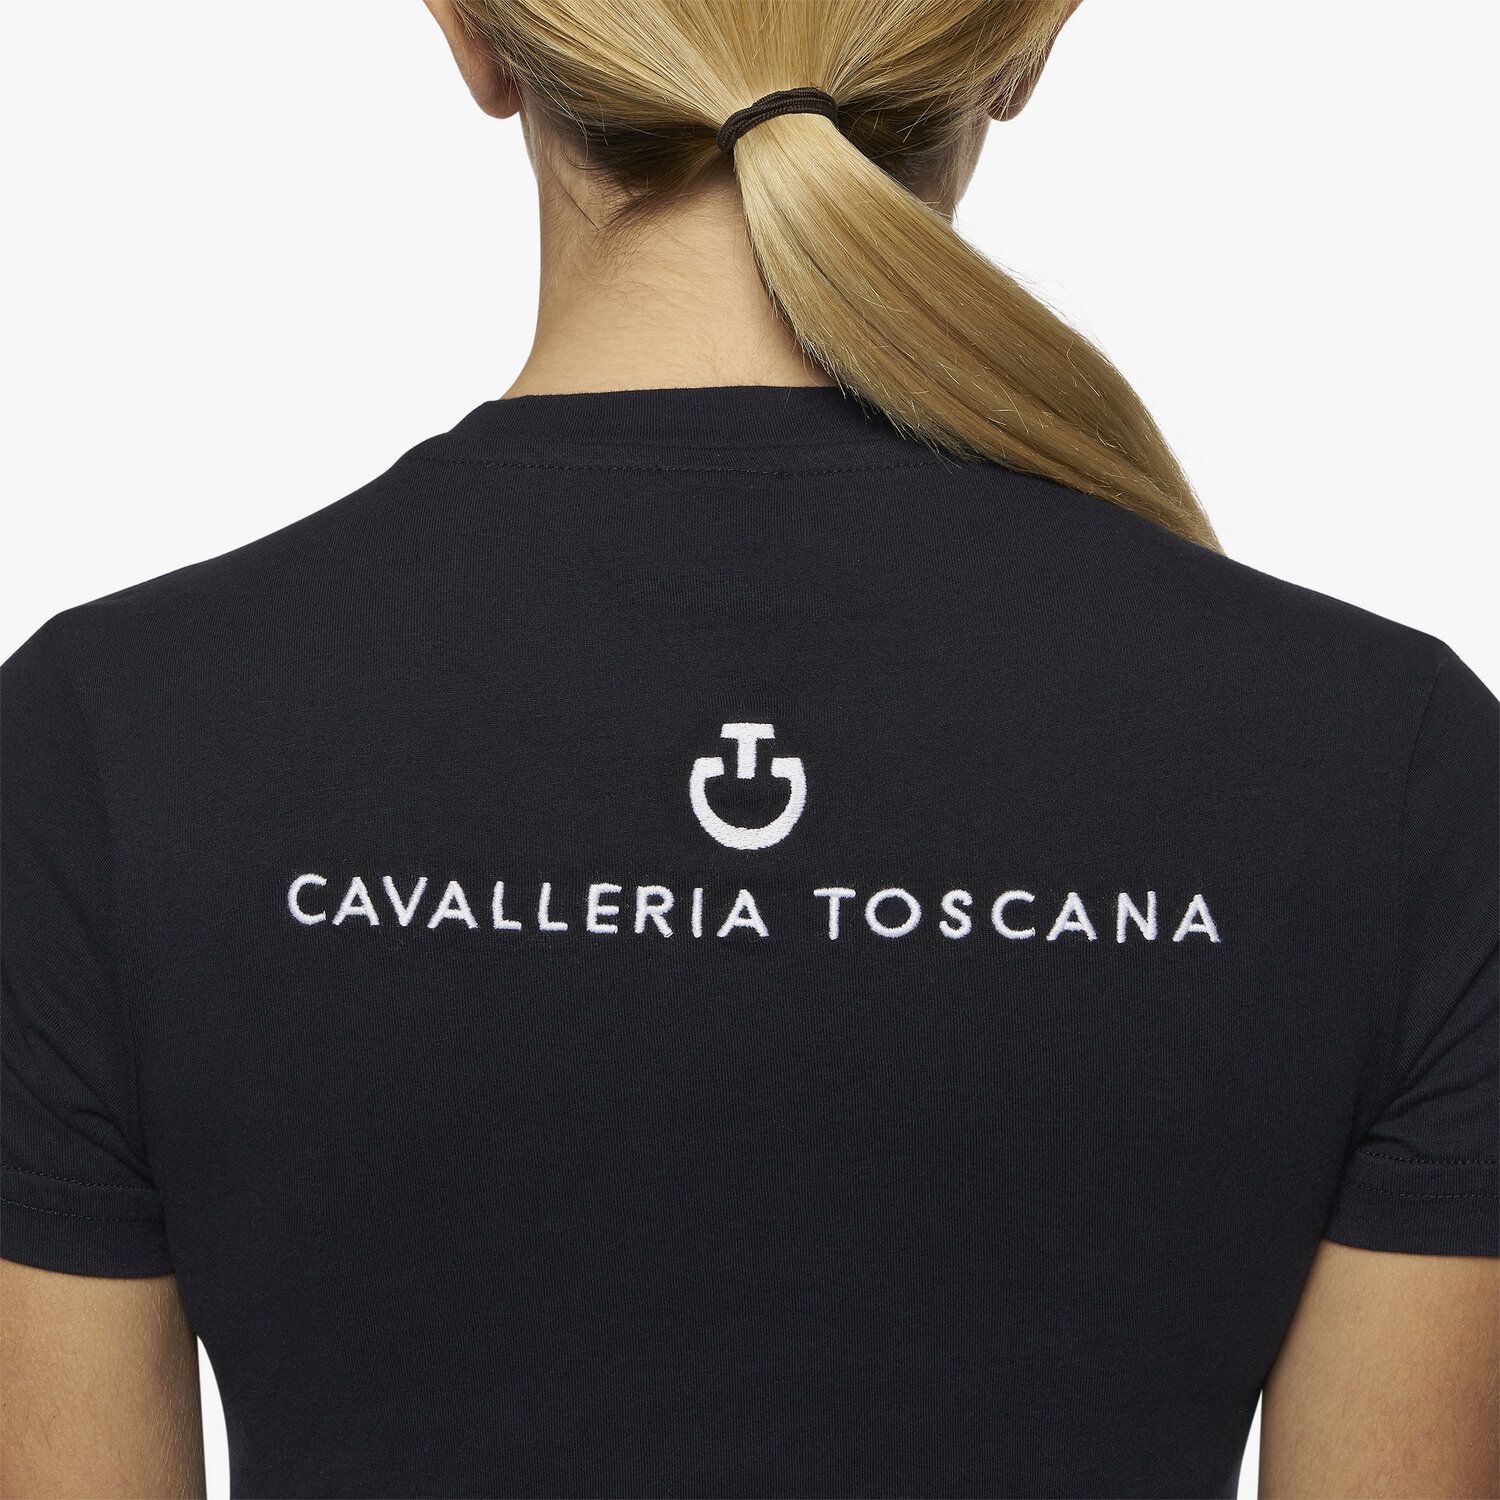 Cavalleria Toscana FISE giril's t-shirt NAVY-4